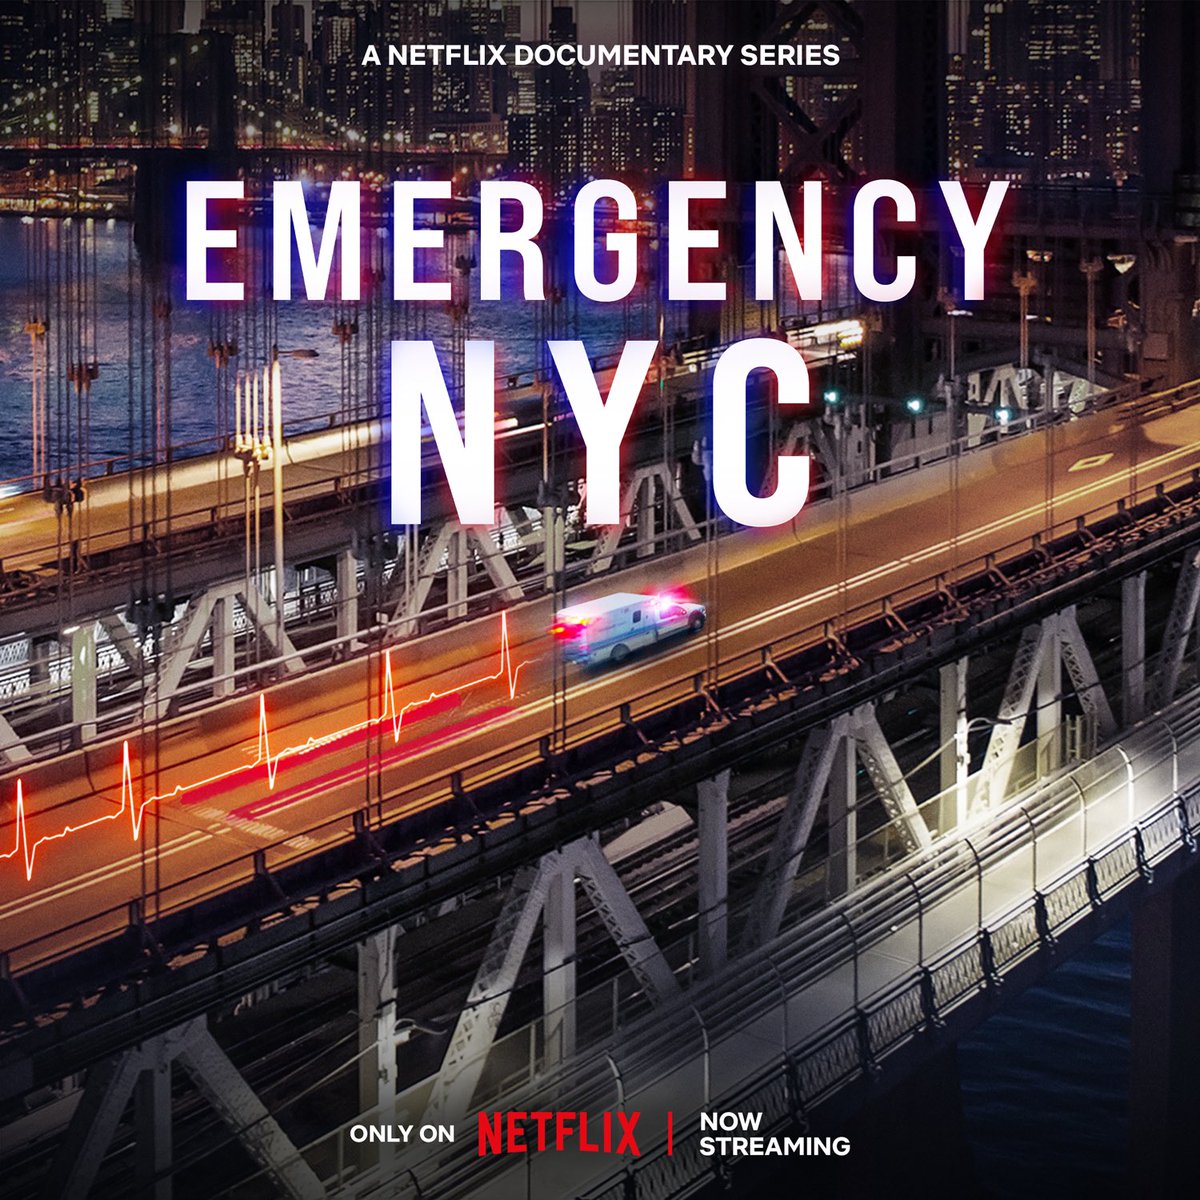 #EmergencyNYCNetflix is now streaming netflix.com/title/81350804